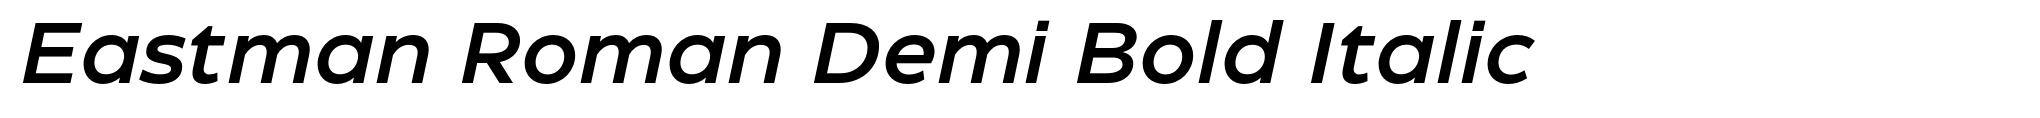 Eastman Roman Demi Bold Italic image